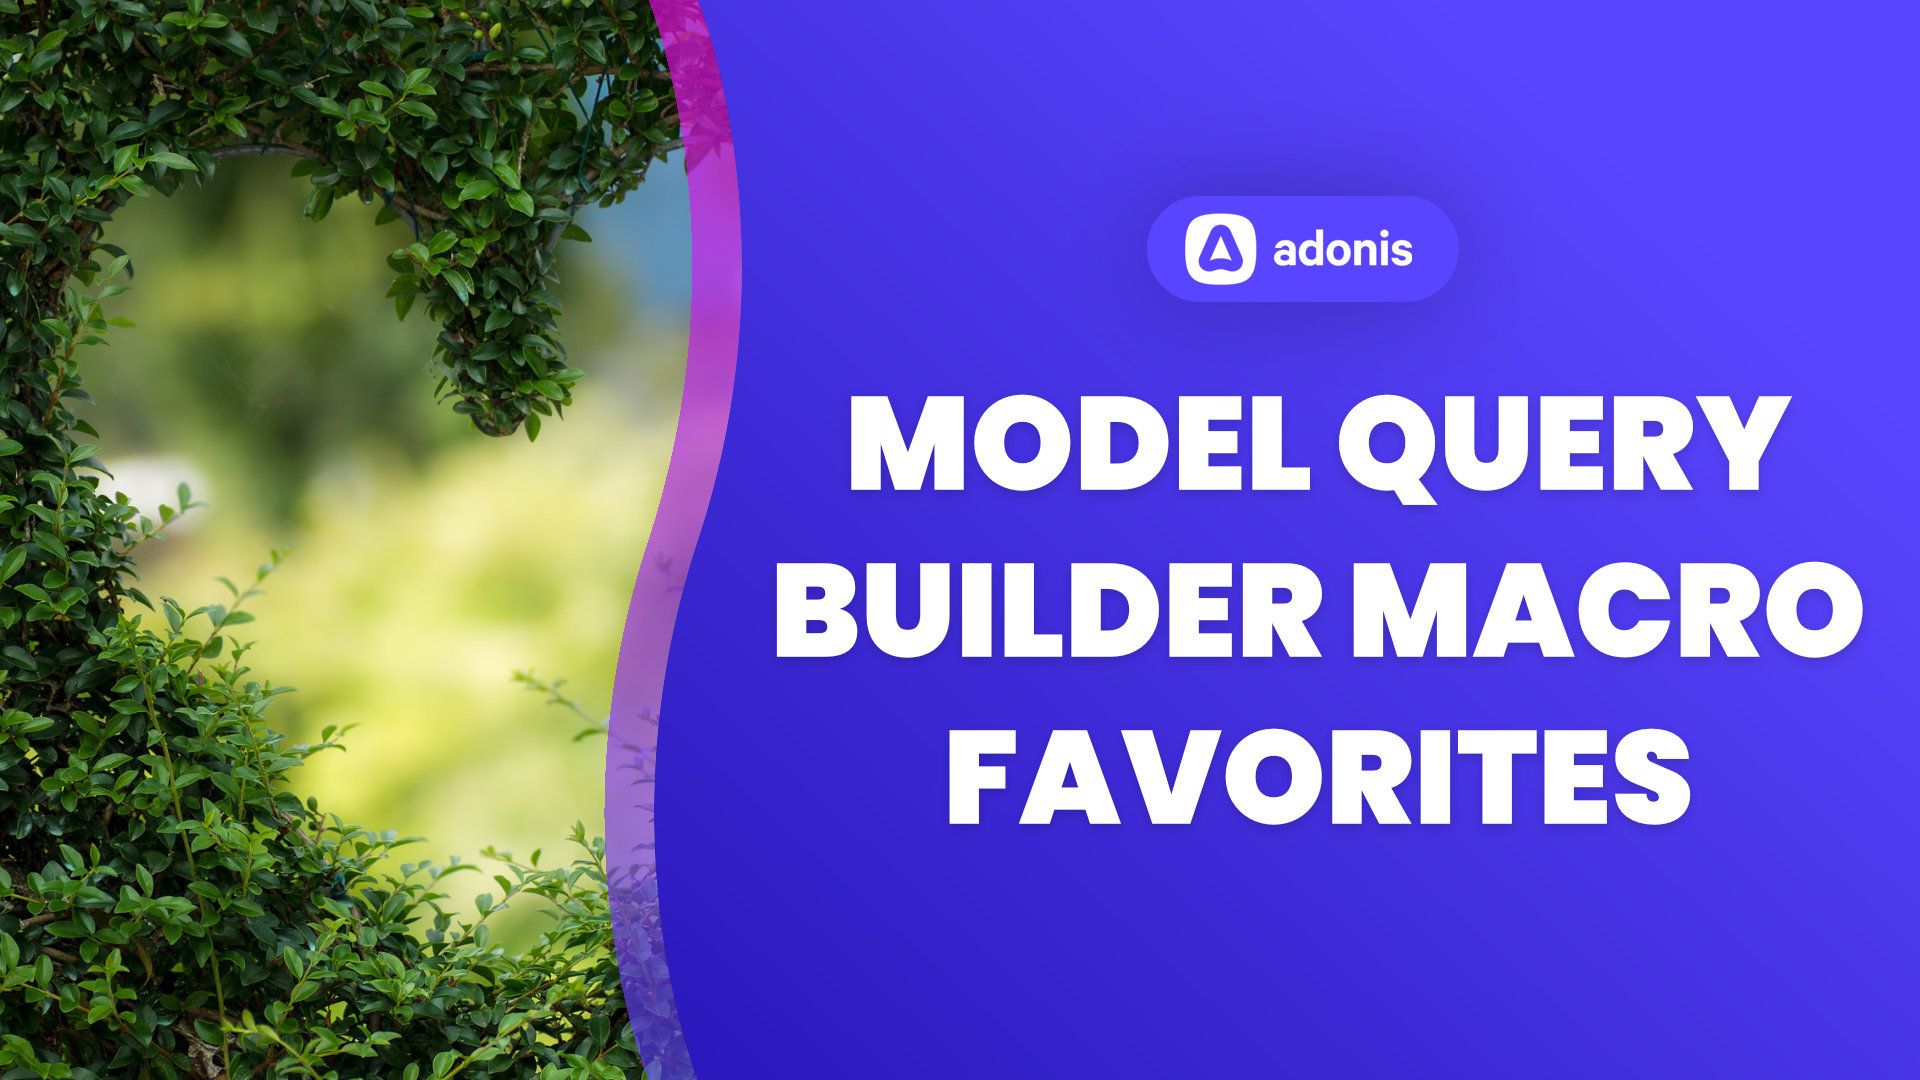 AdonisJS Model Query Builder Macro Favorites